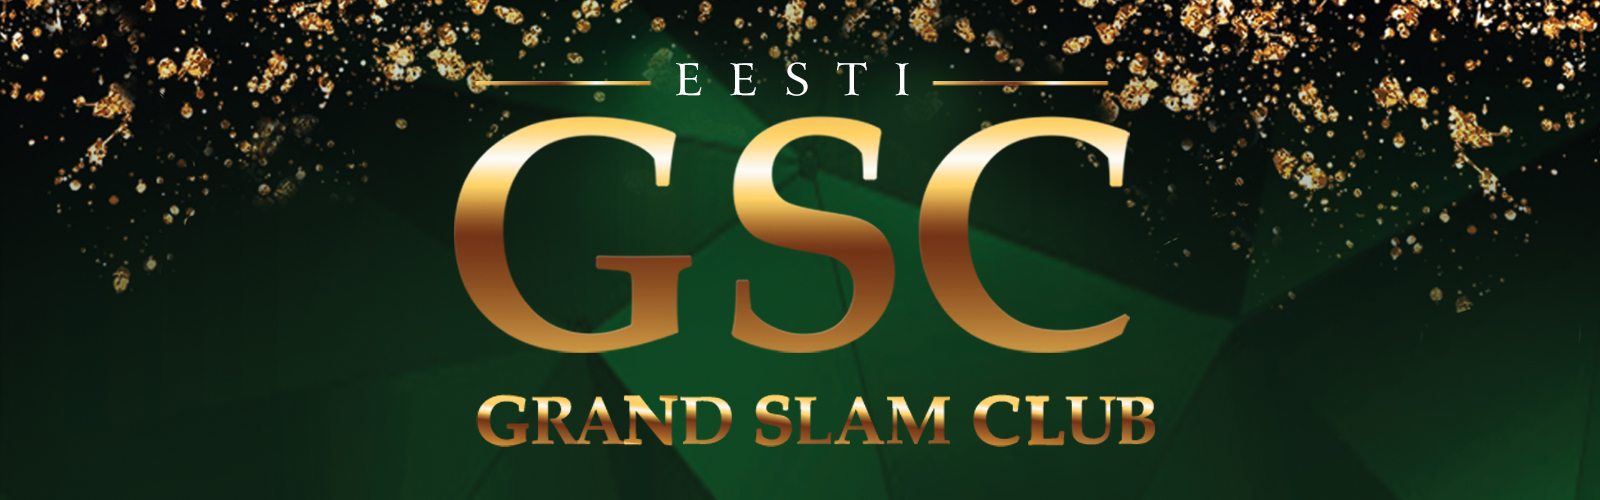 gsc-tennis-ee-logo